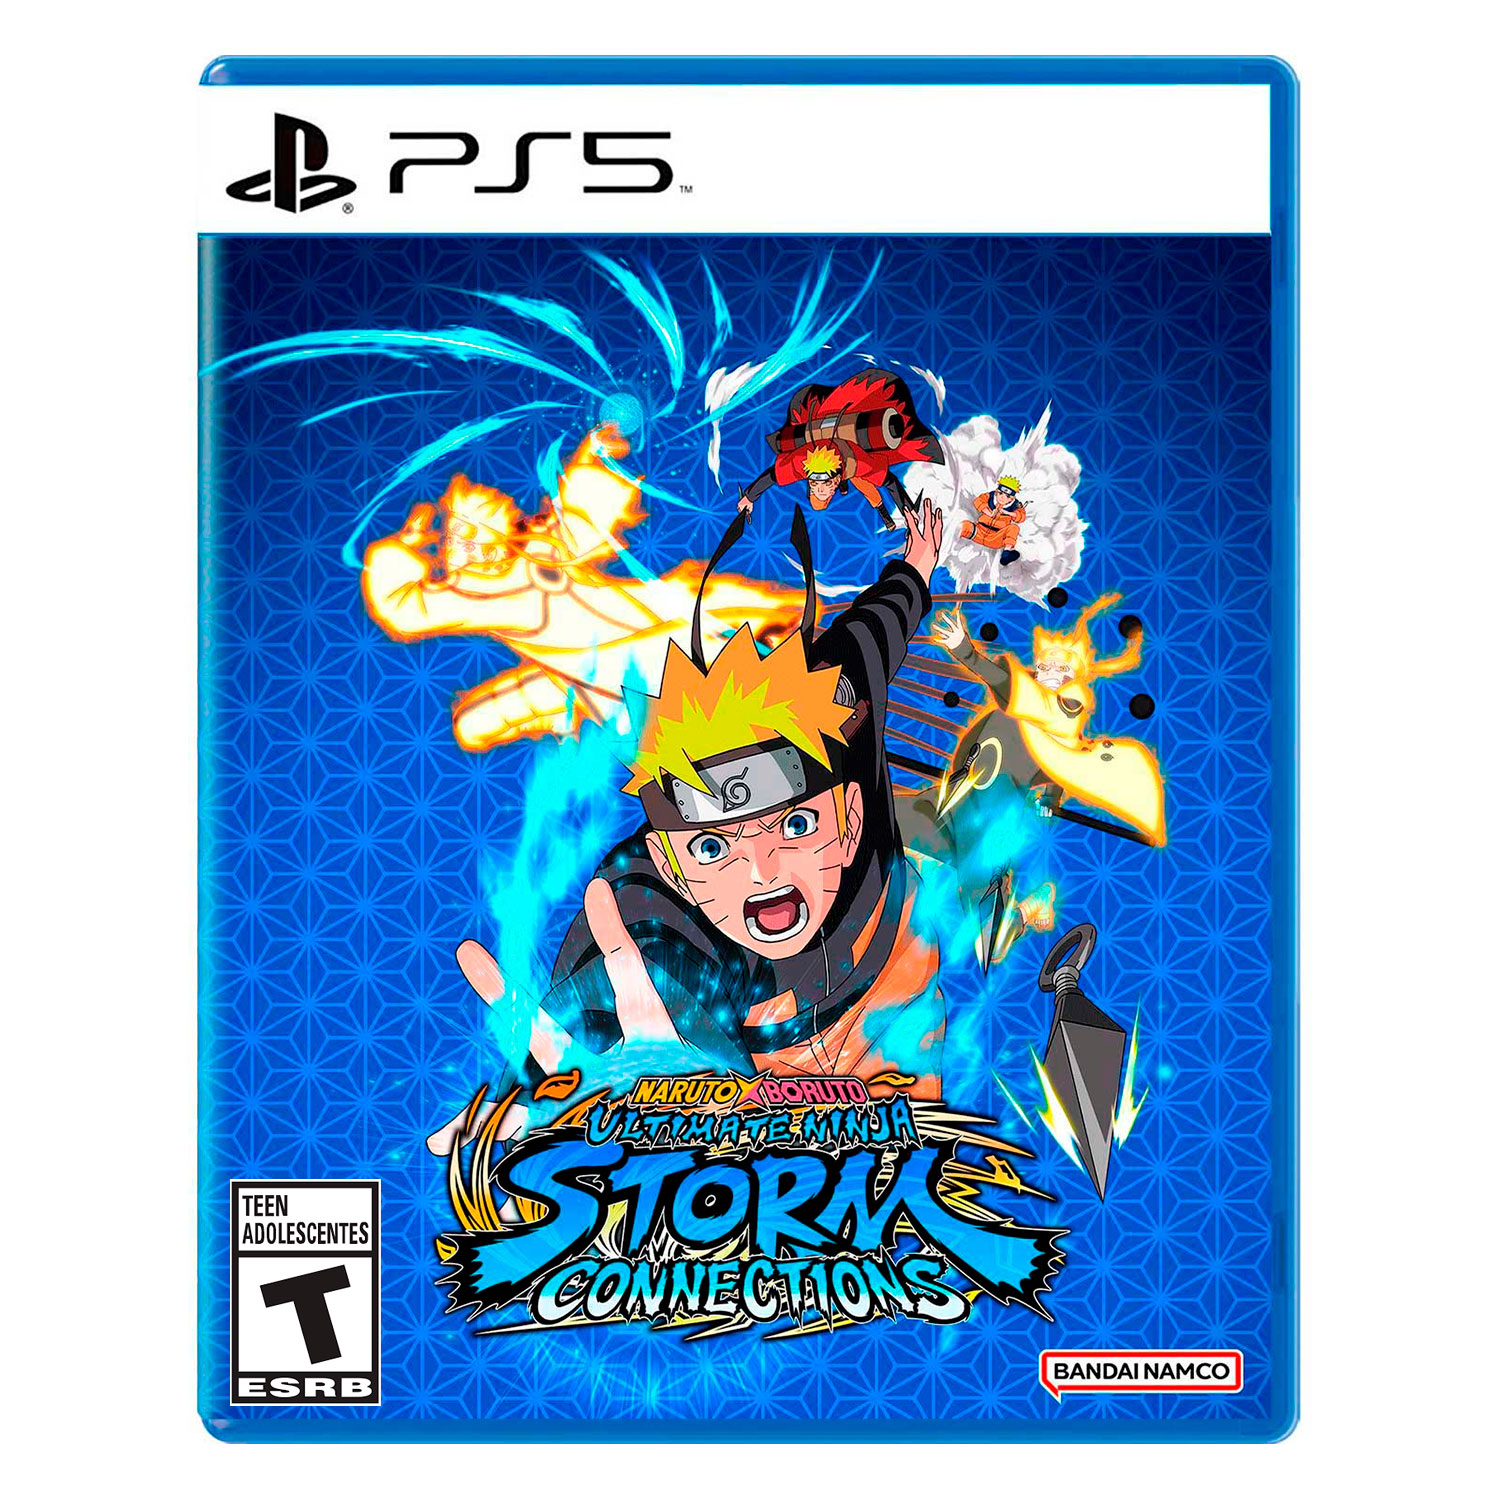 Jogo Naruto X Boruto Ultimate Ninja Storm Connections Collector's Edition para PS5